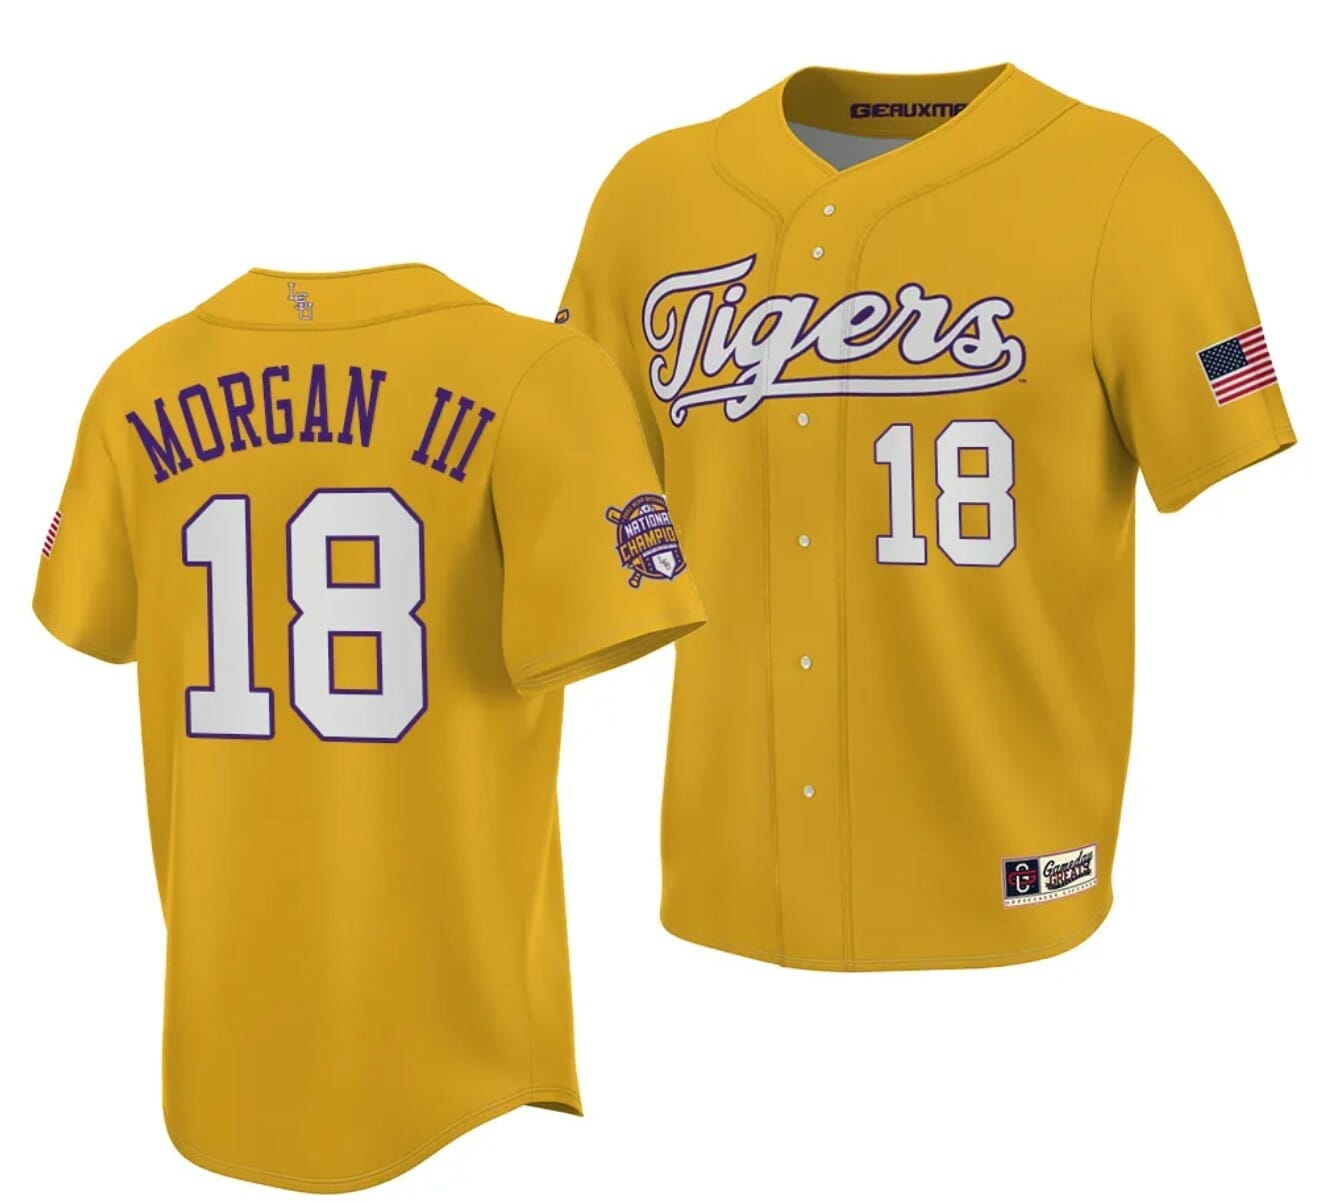 LSU Tigers Baseball Jersey Tre Morgan #18 National Champions NCAA College Stitched White